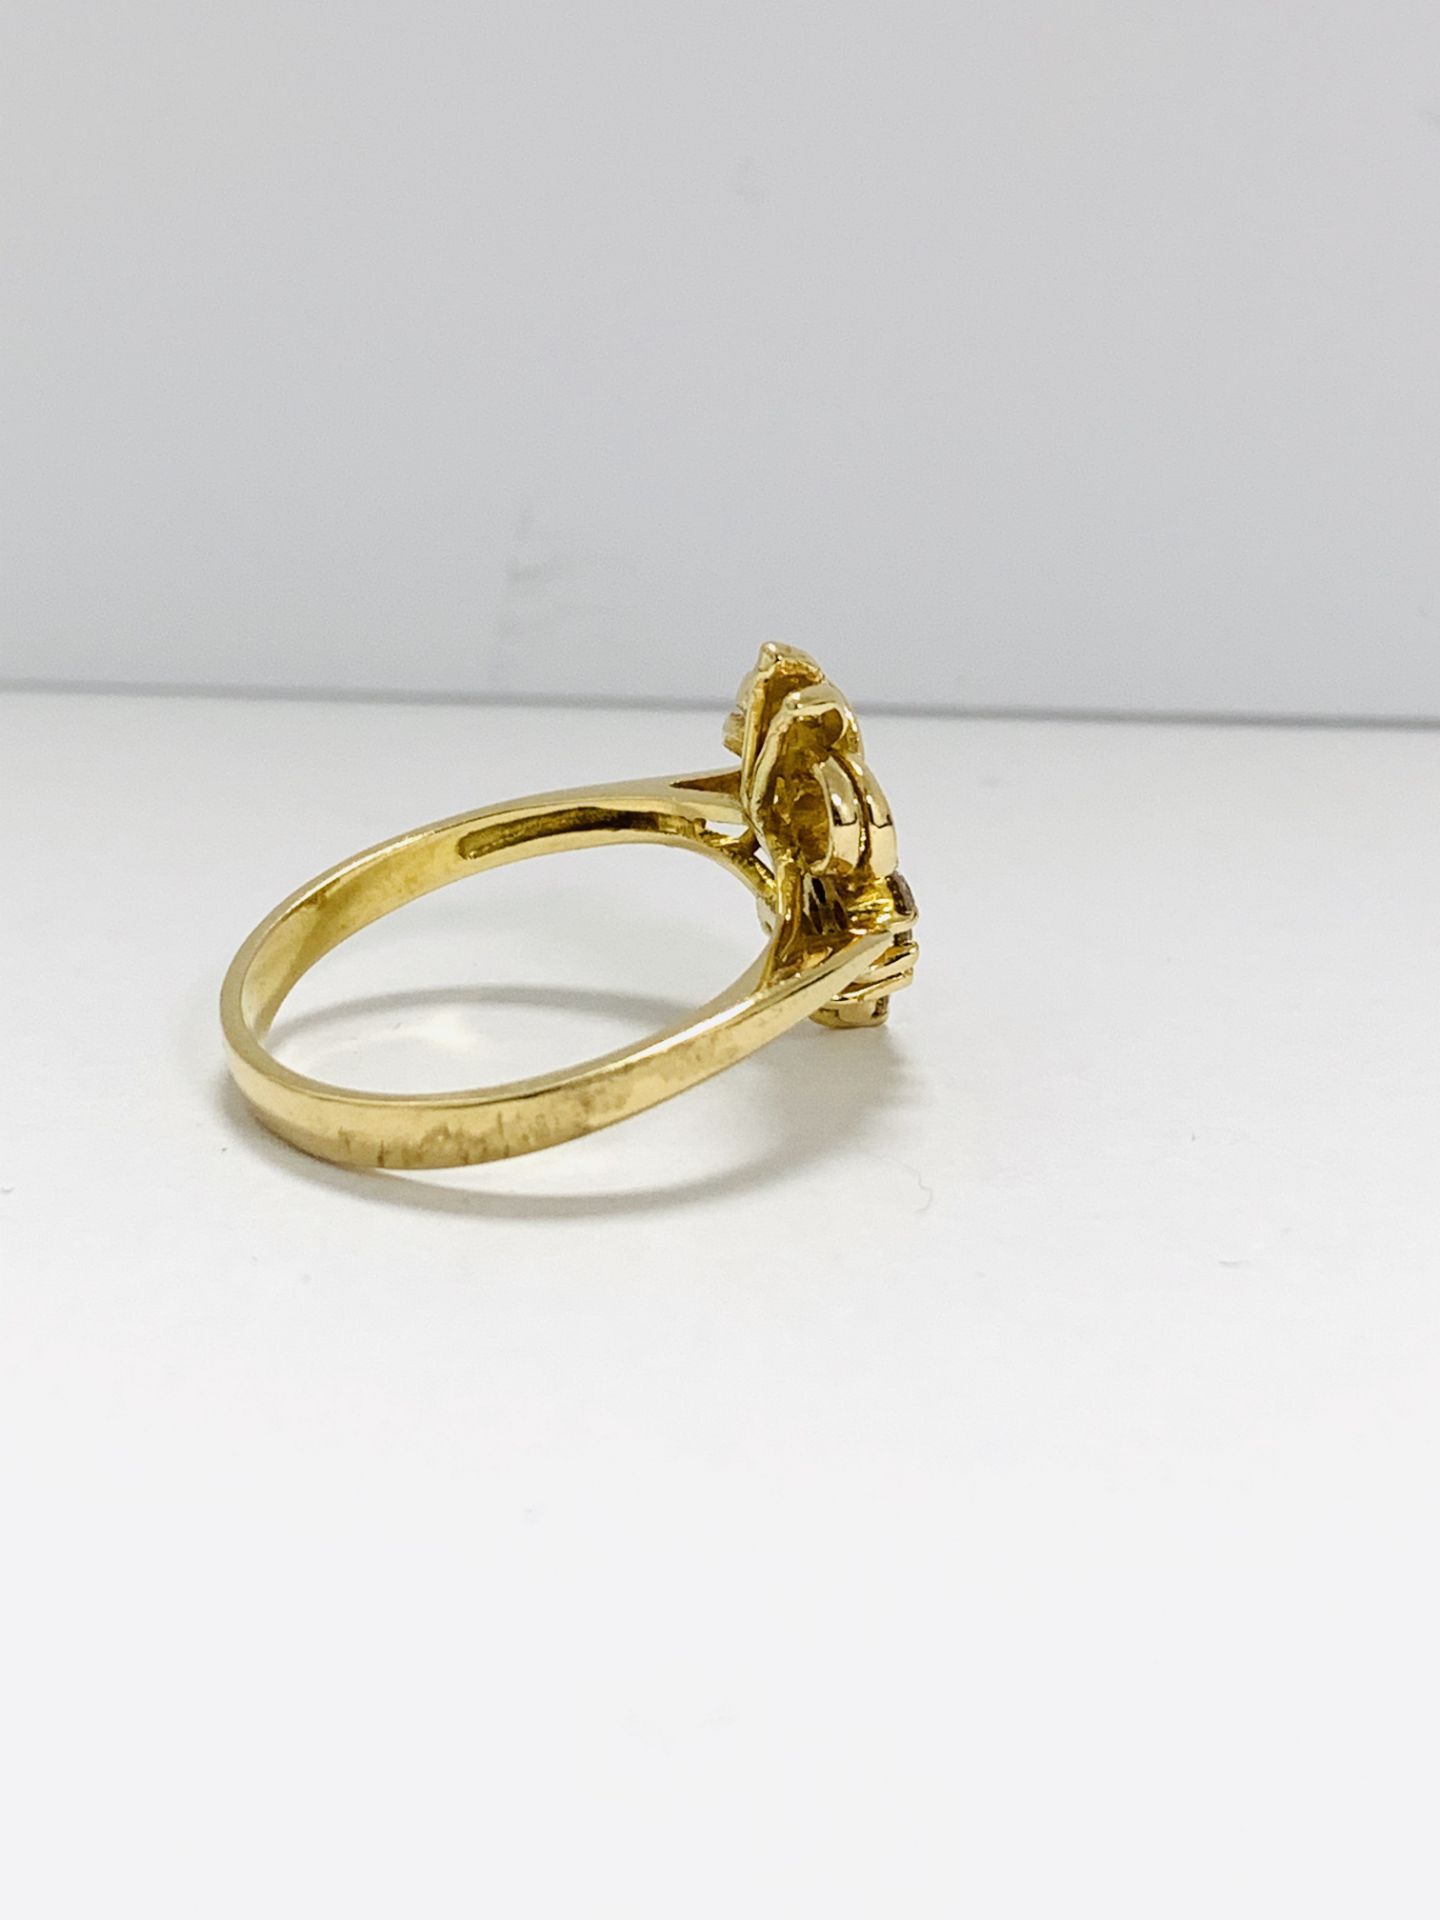 18K Yellow Gold Ring - Image 5 of 8